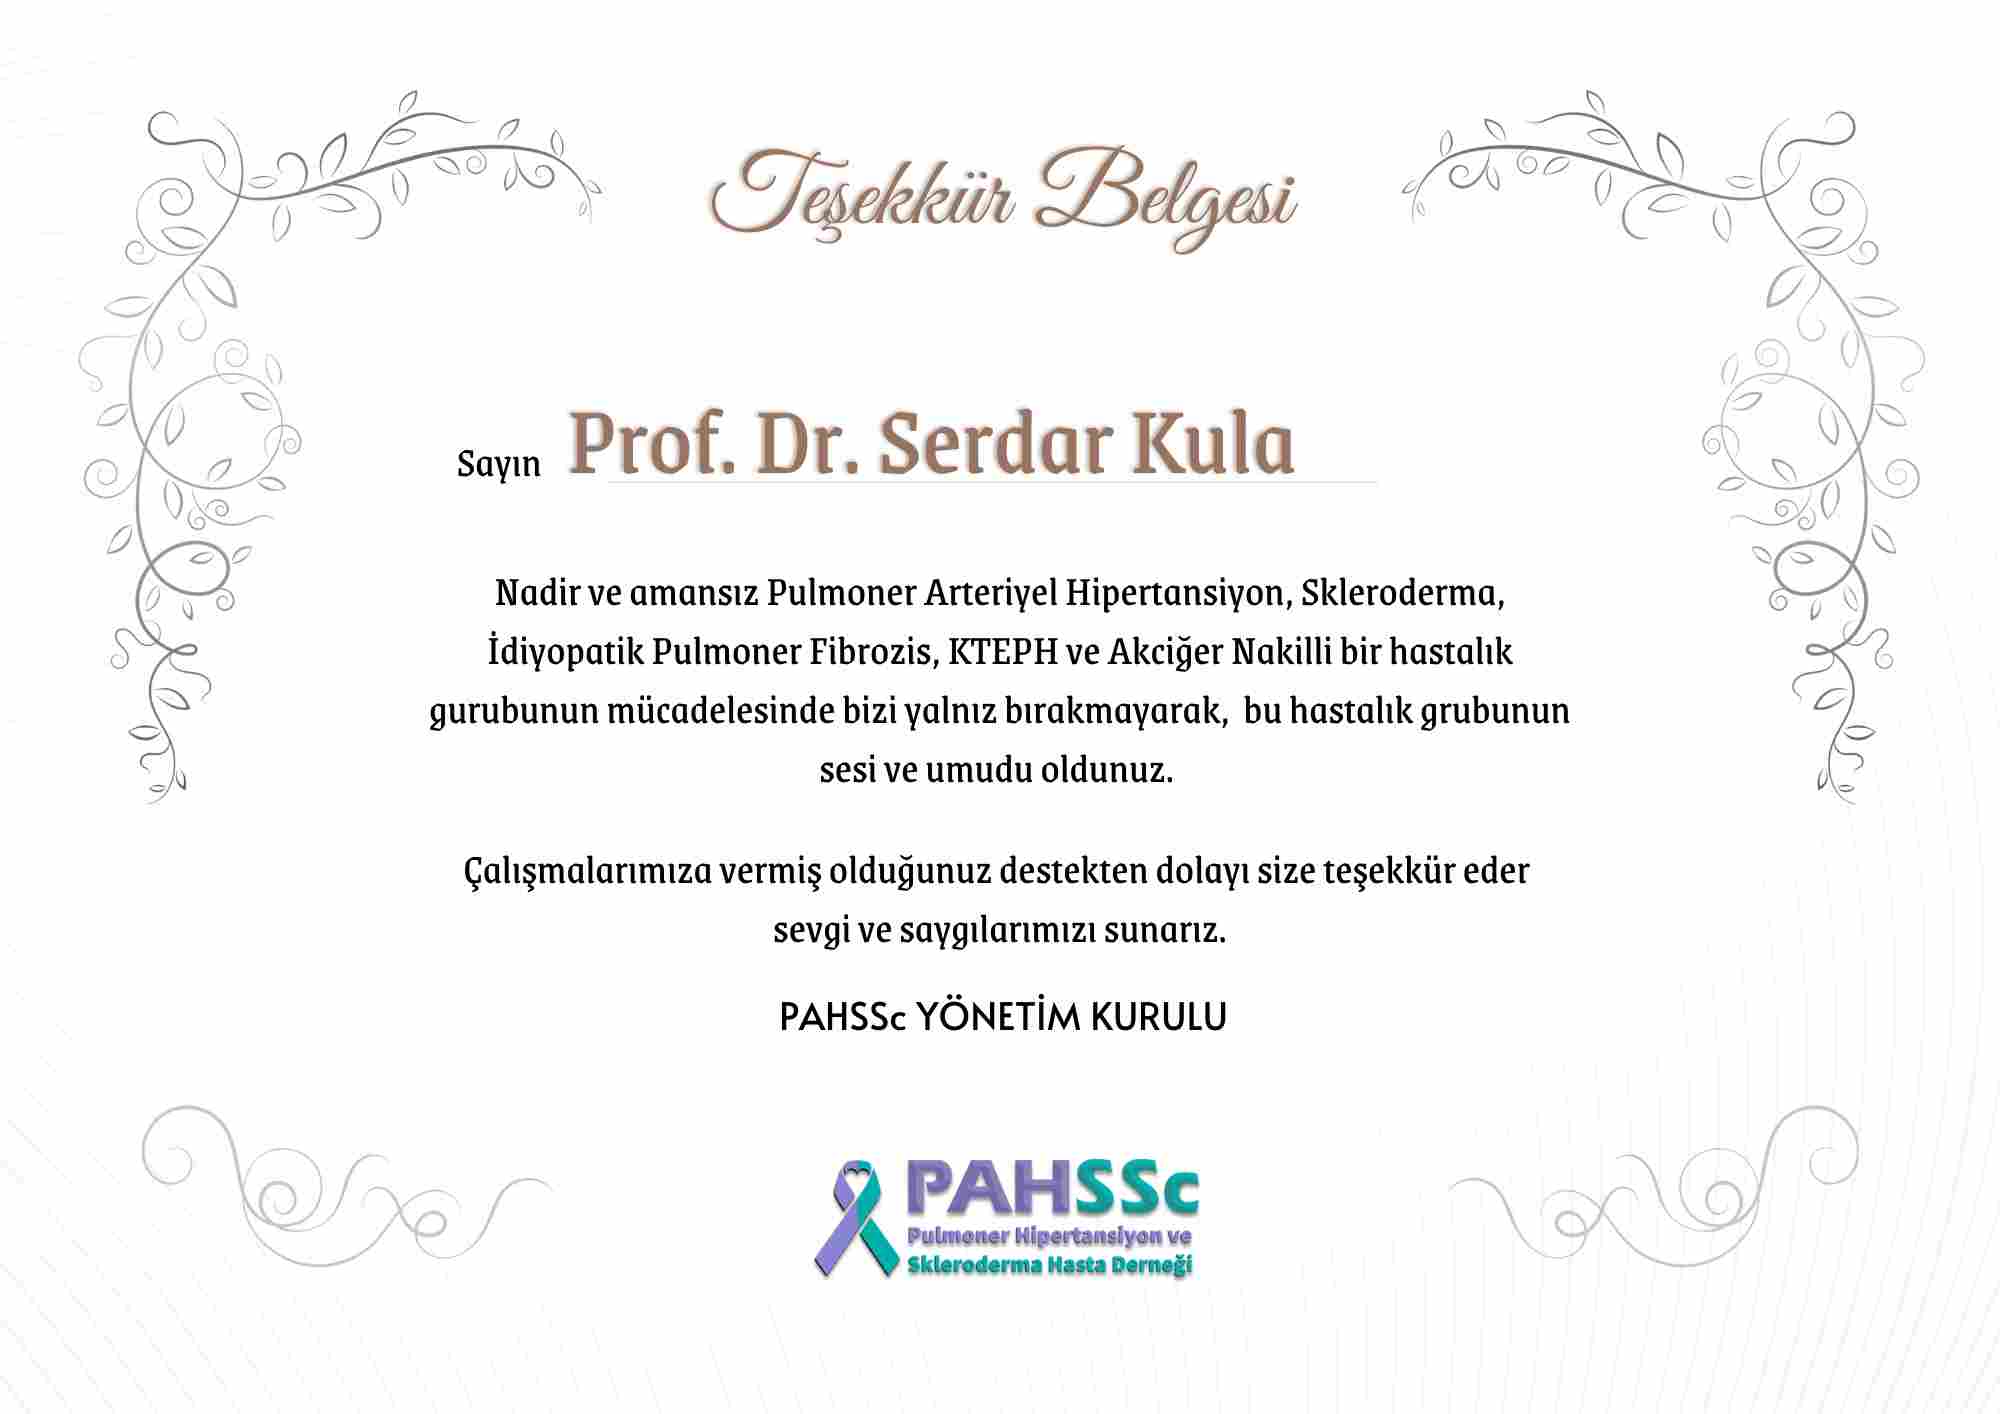 Prof. Dr. Serdar Kula